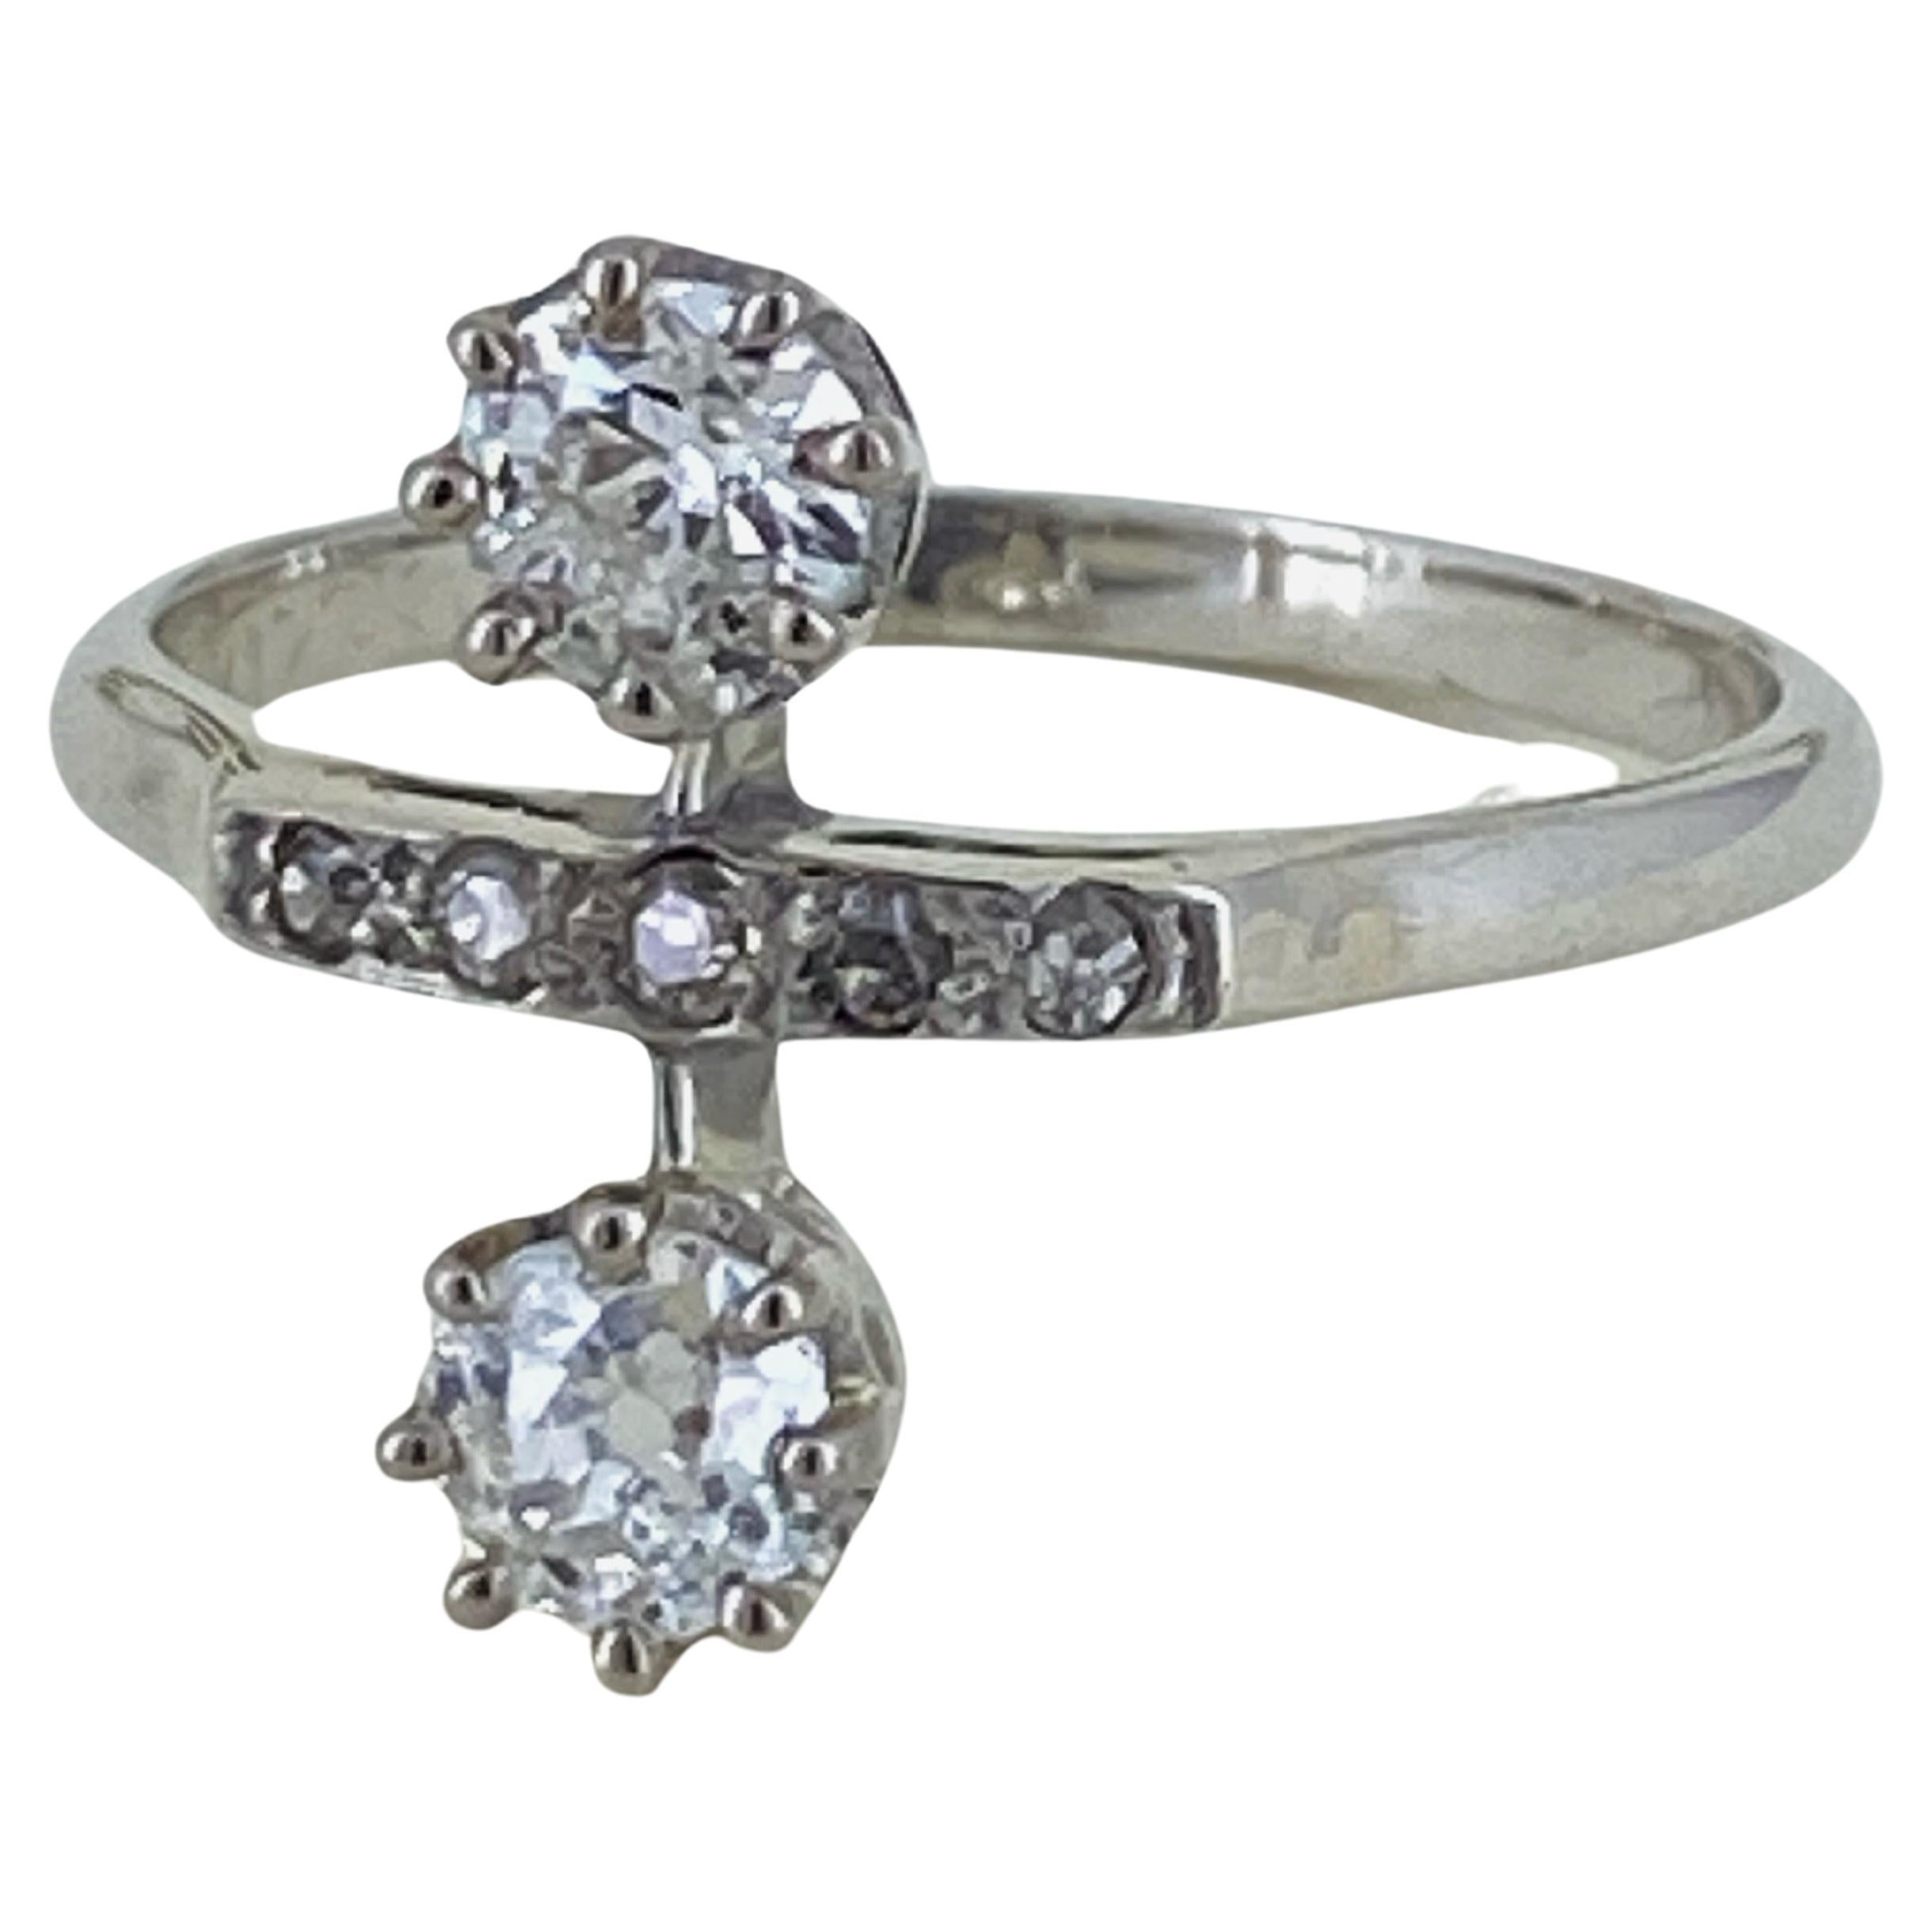 Superb Art-Deco 2-Stone 1.20ct Old-European Cut Diamond Ring in 18K & Platinum For Sale